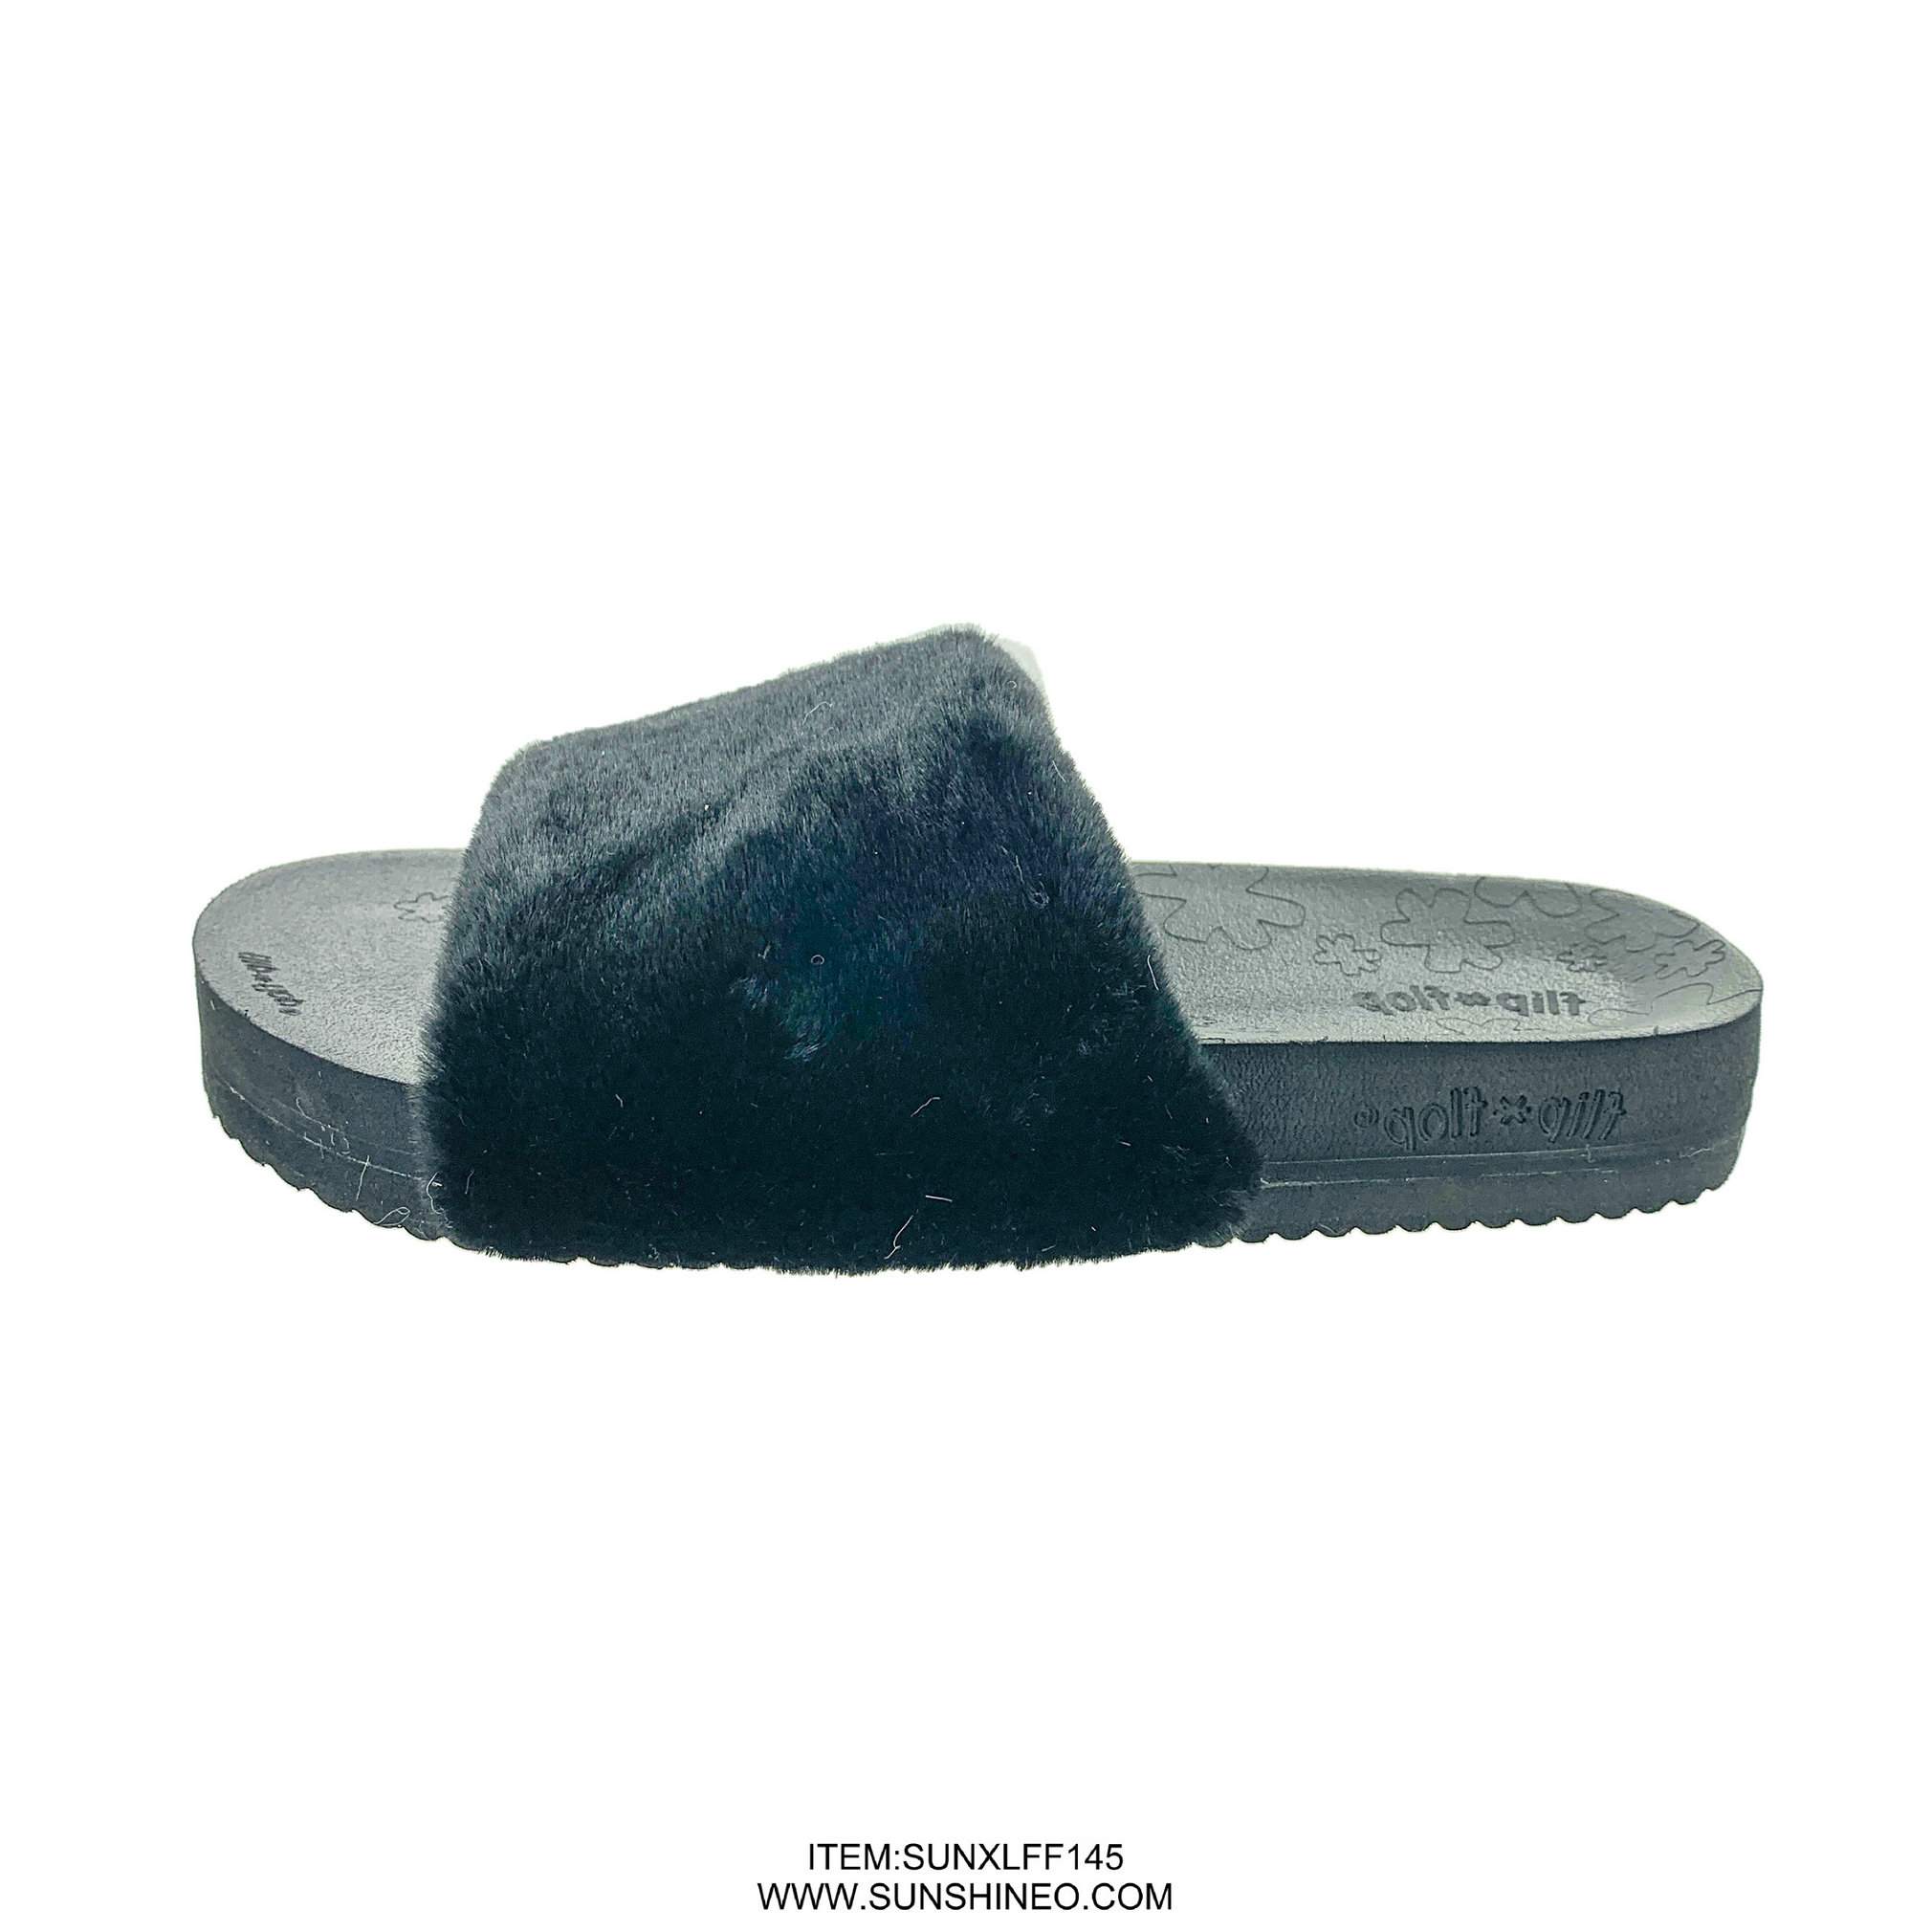 SUNXLFF145 fur flip flop sandals winter slippers